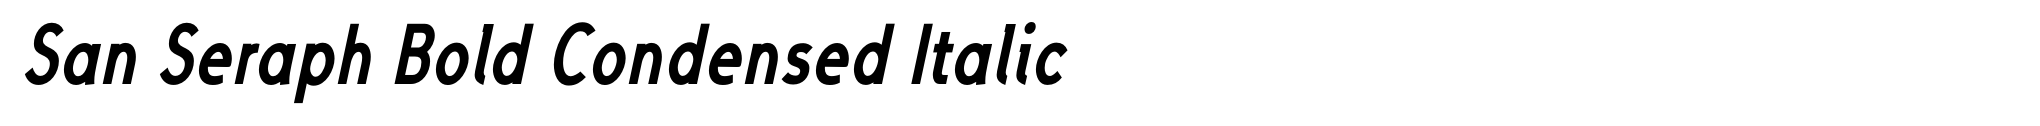 San Seraph Bold Condensed Italic image